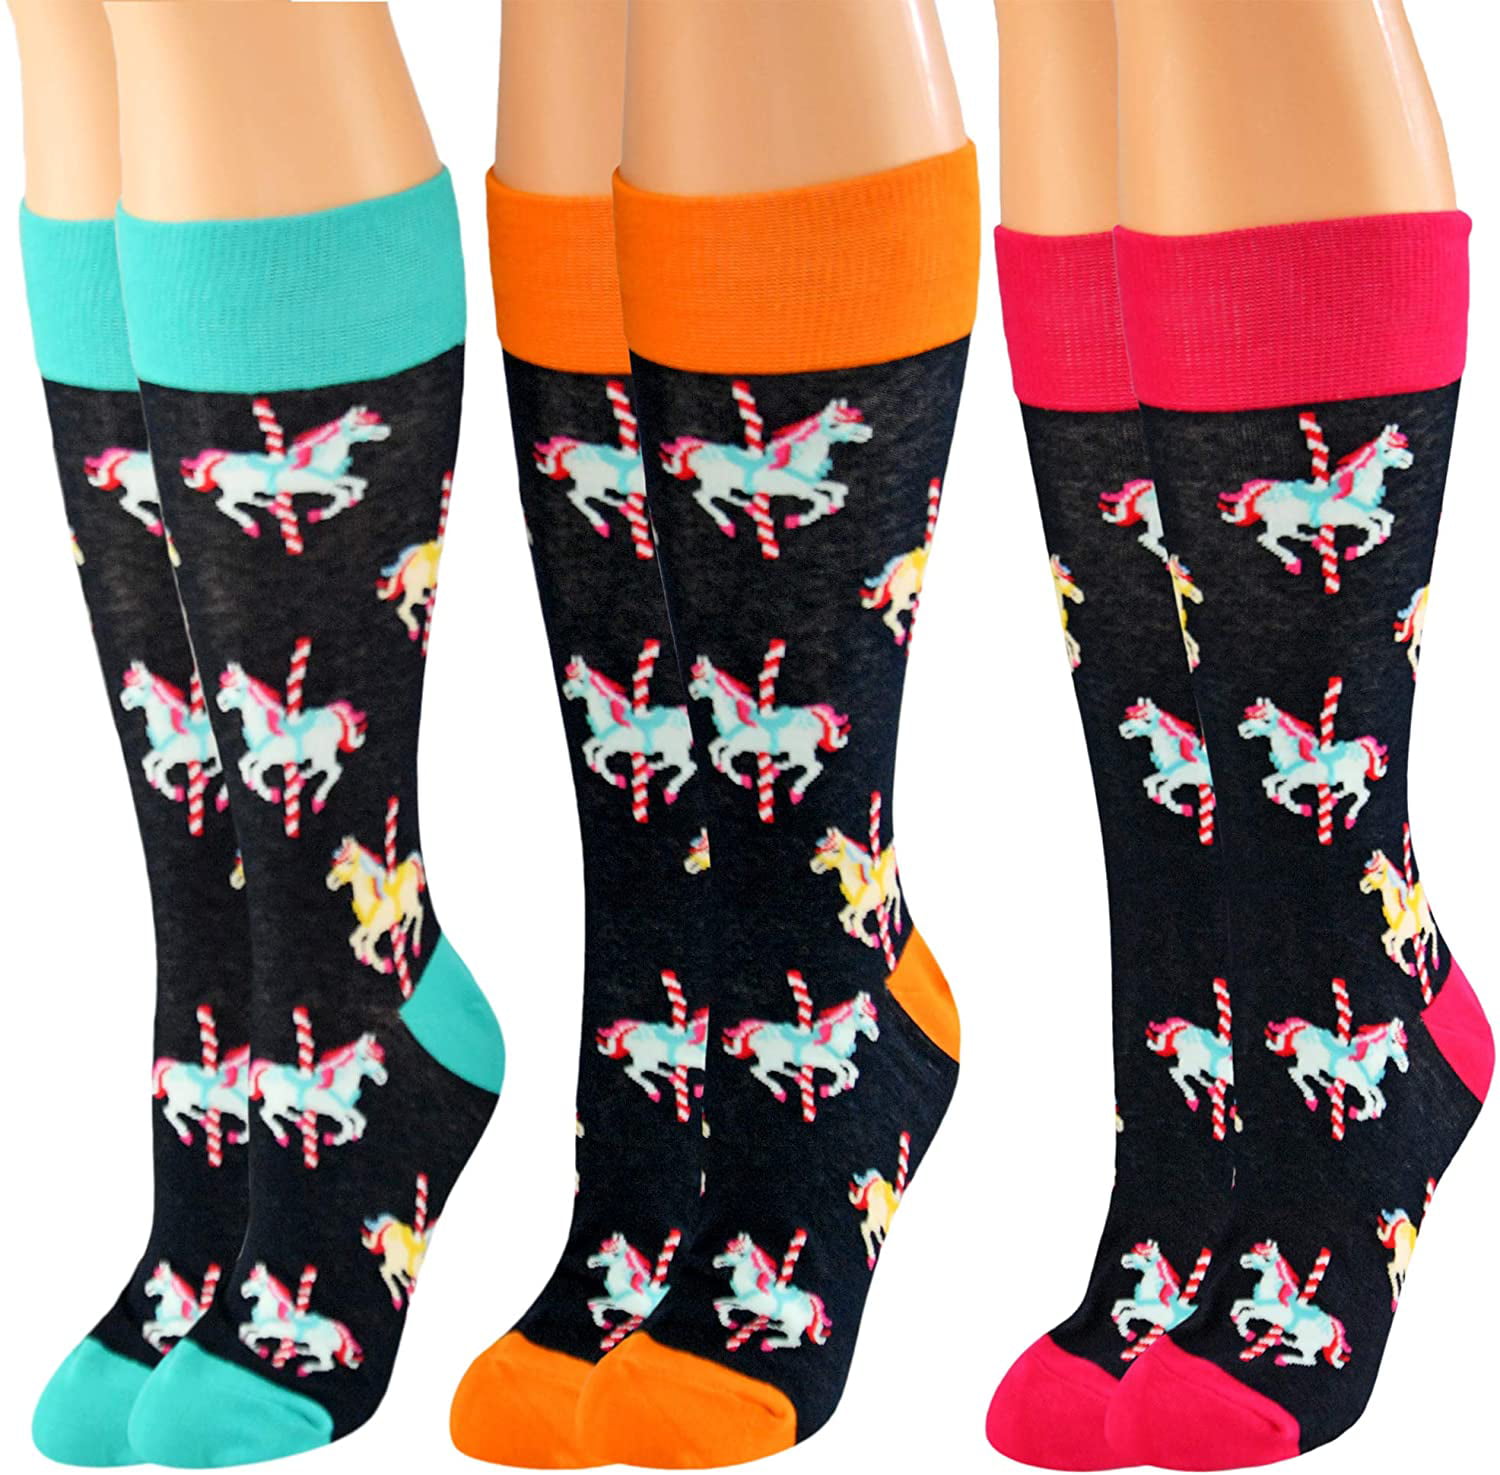 crazy socks,cool socks,gift idea unisex cozy casual crew socks,fun design Horse Sock